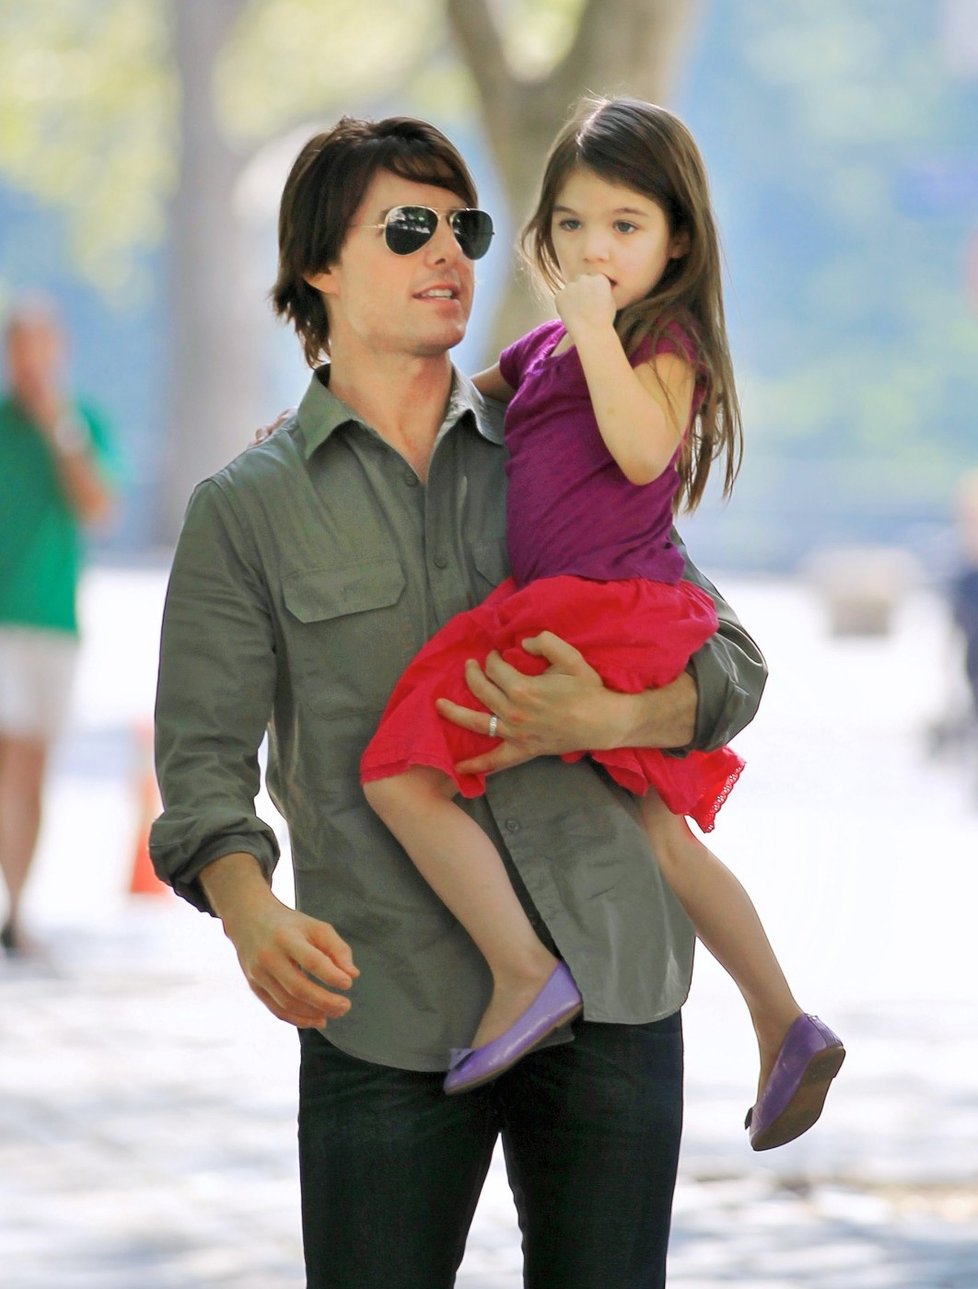 Slavný herec Tom Cruise s dcerou Suri